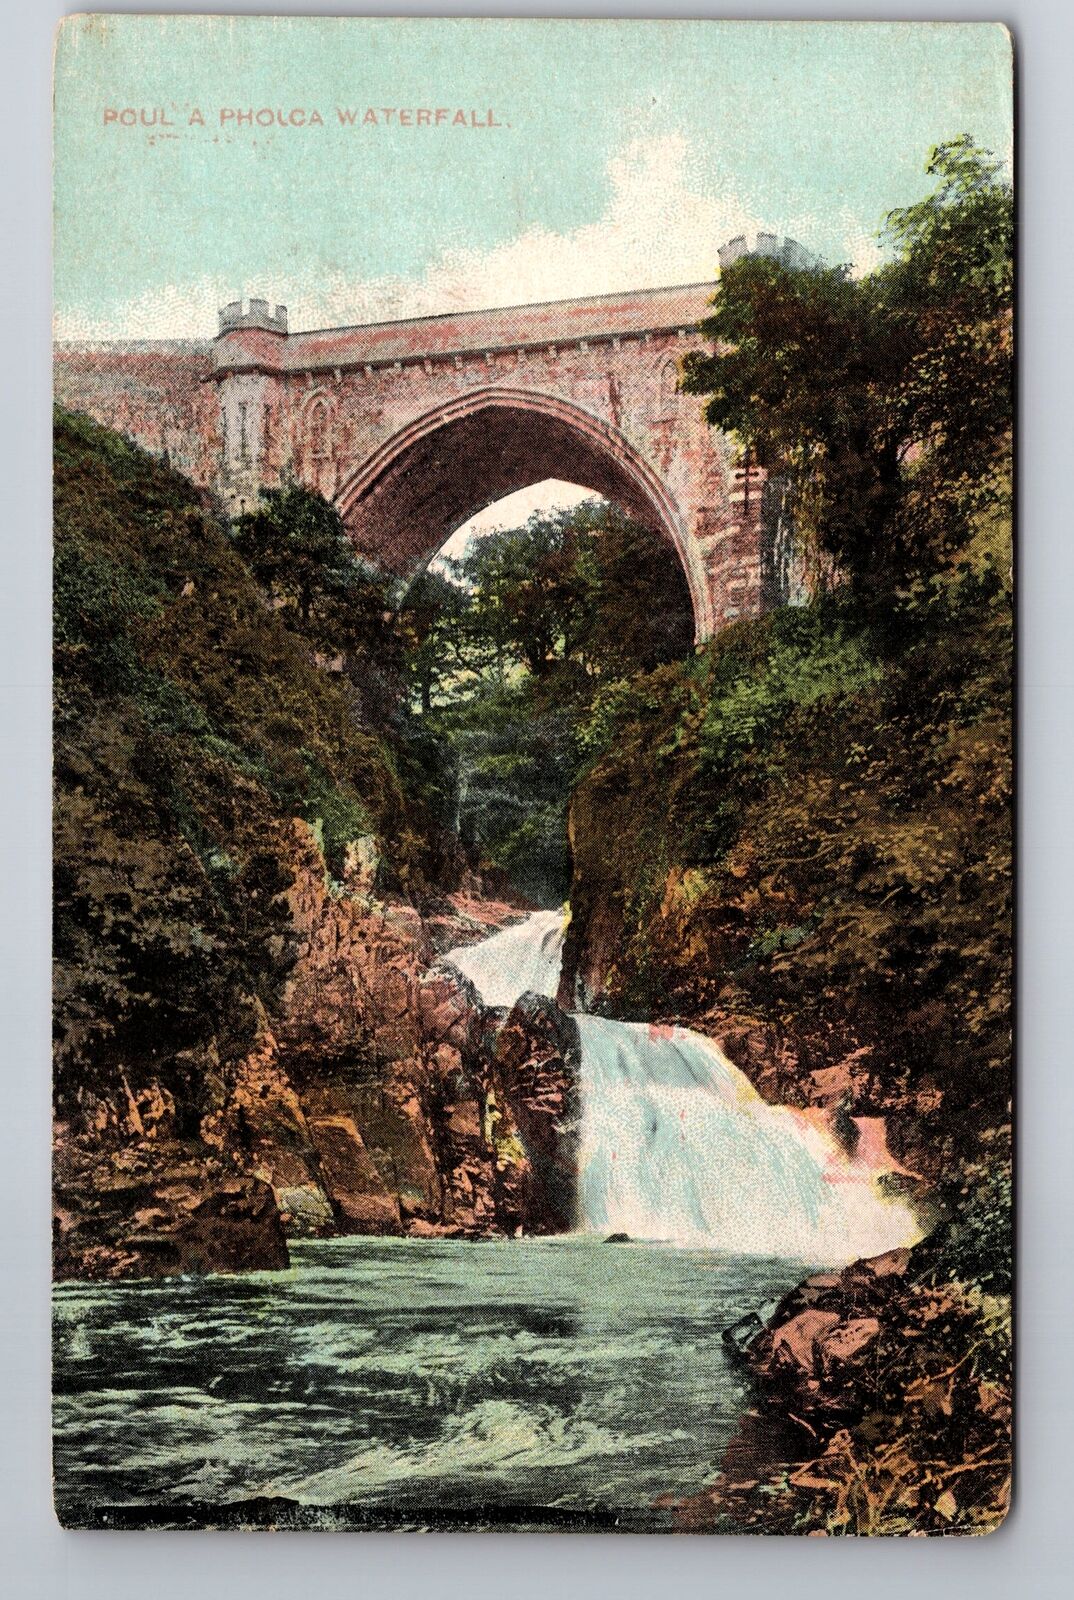 Dublin-Ireland, Poul-a-Phouca Waterfall, Antique Vintage Souvenir Postcard